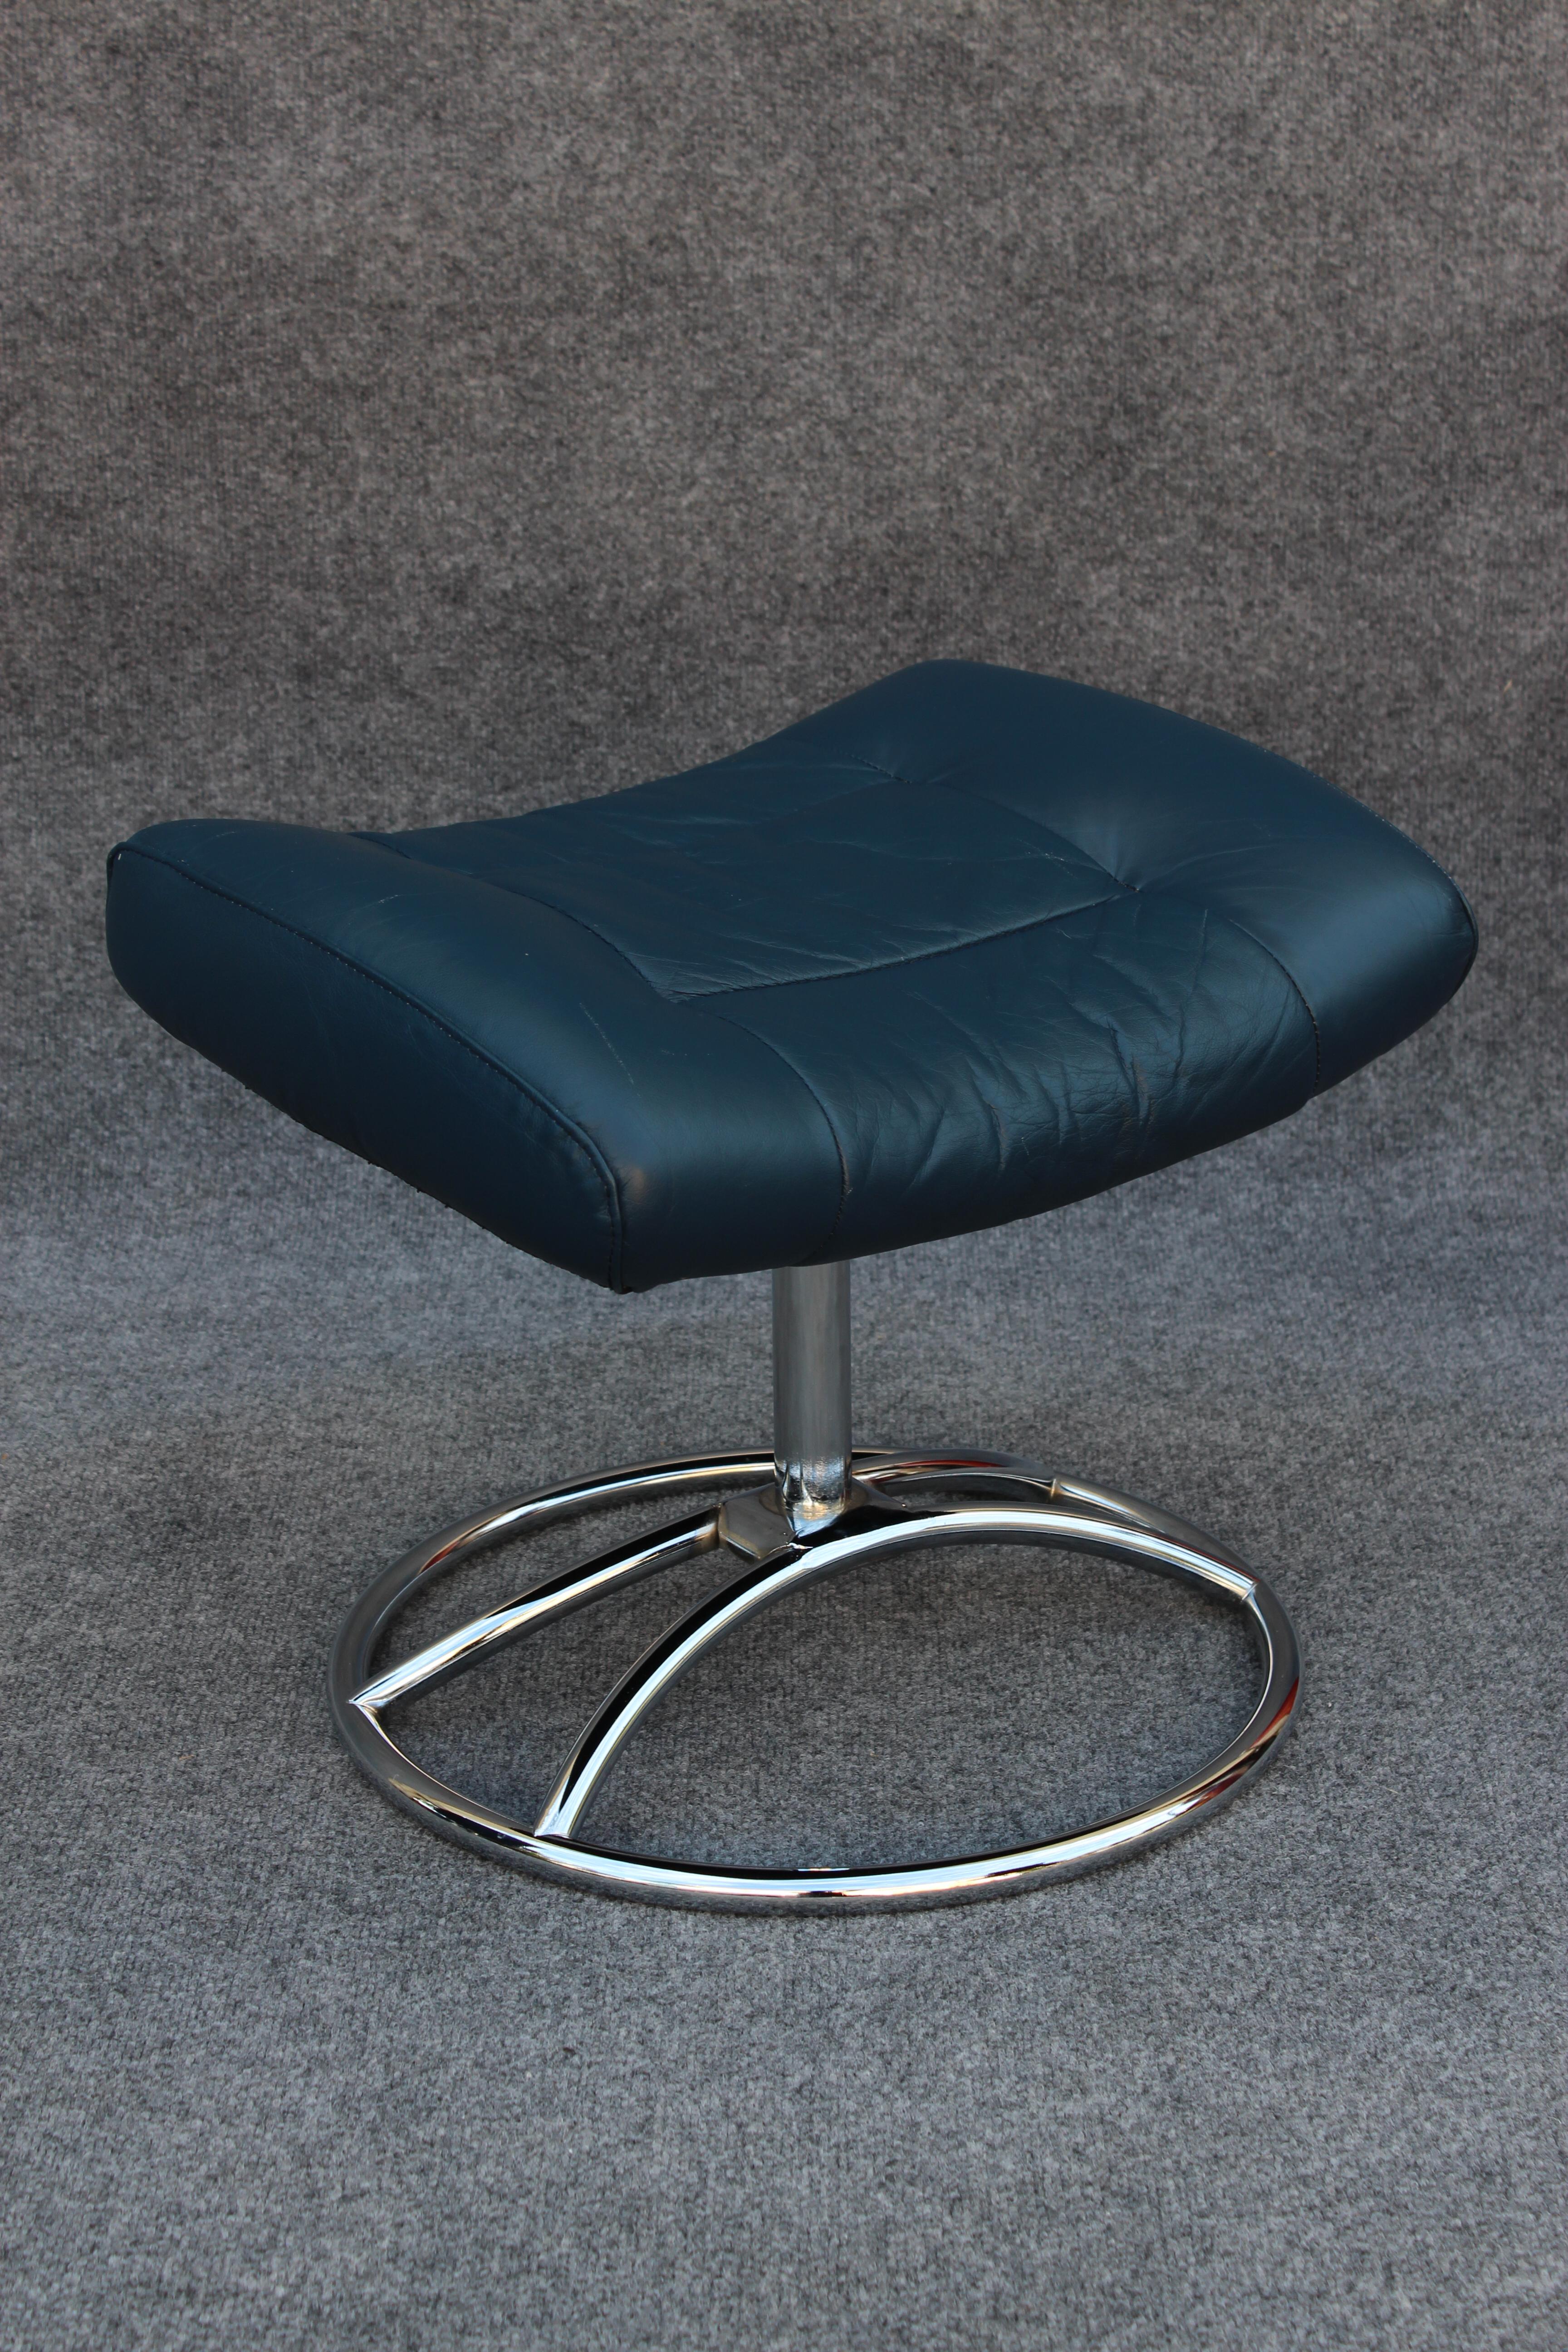 Ekornes Stressless Stressless Lounge Chair & Ottoman, Navy Blue Leather & Steel For Sale 7